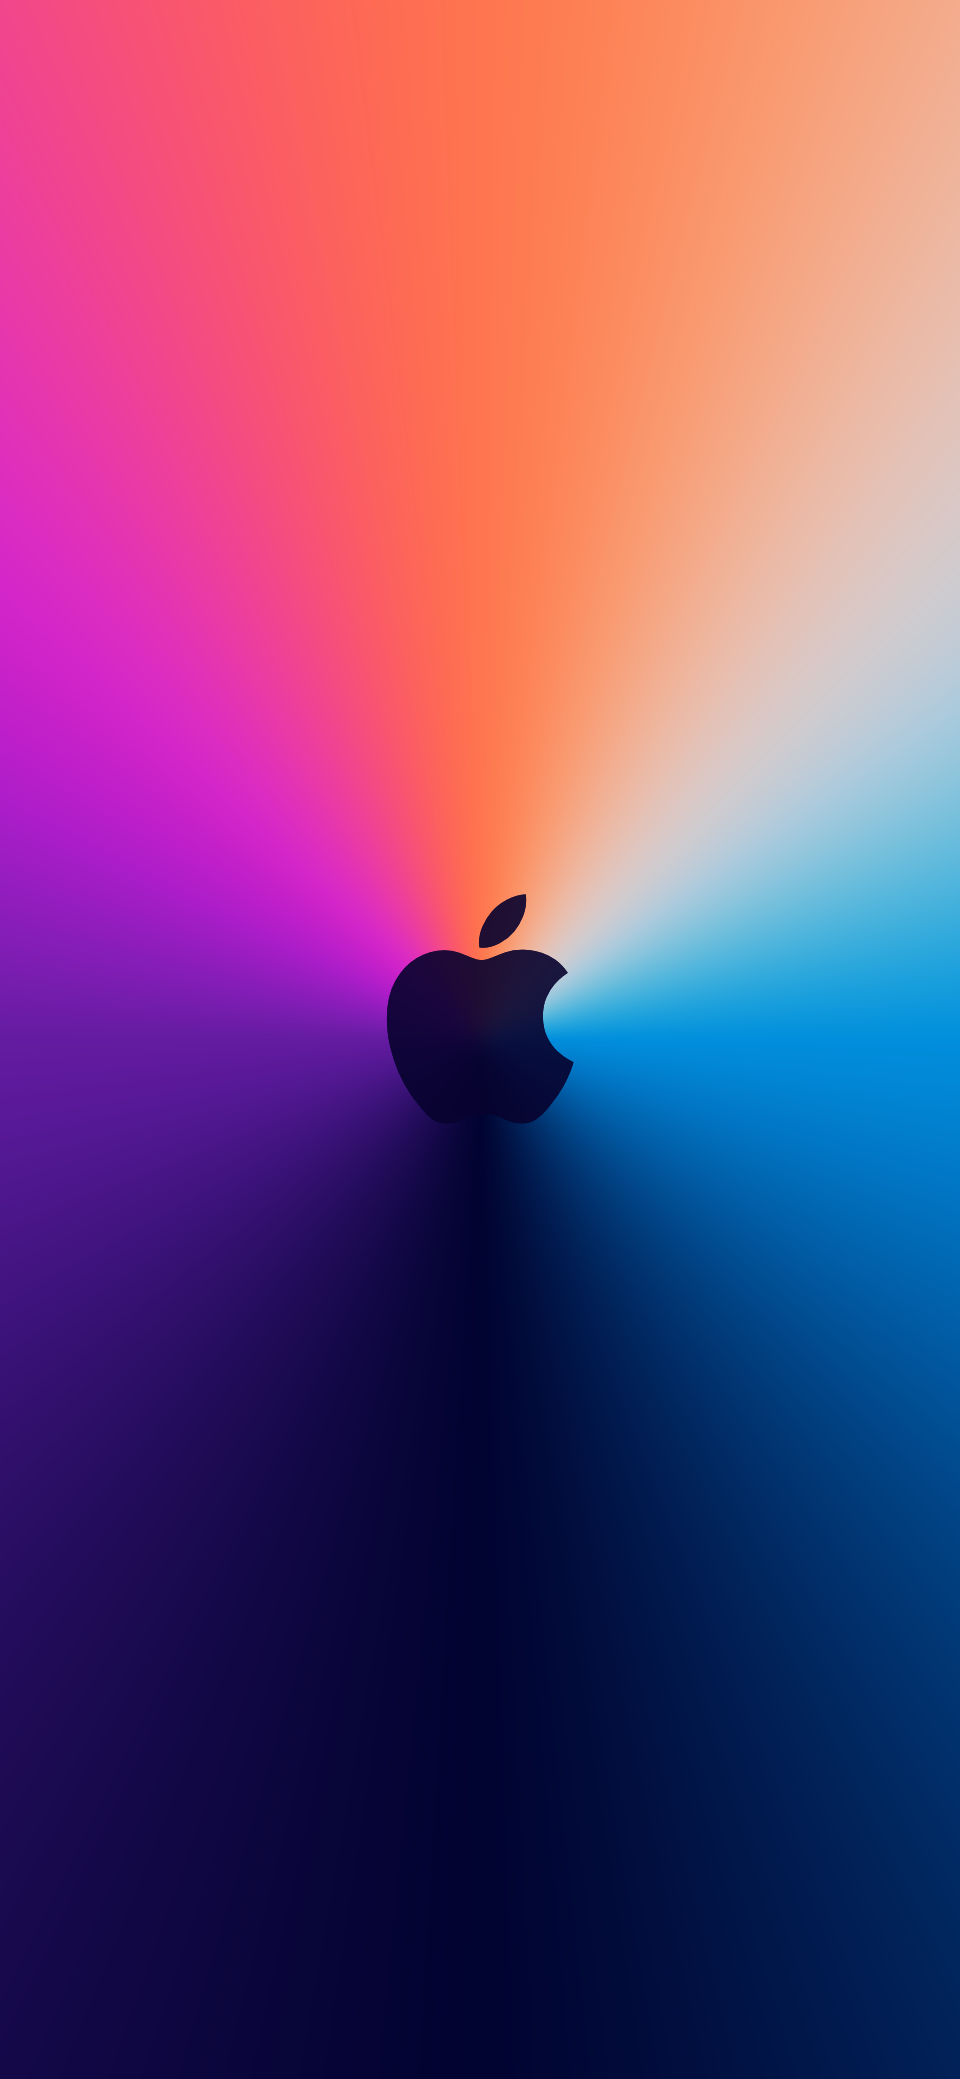 iPhone 12 Pro Max Wallpaper. Apple logo wallpaper iphone, Apple wallpaper iphone, iPhone wallpaper logo